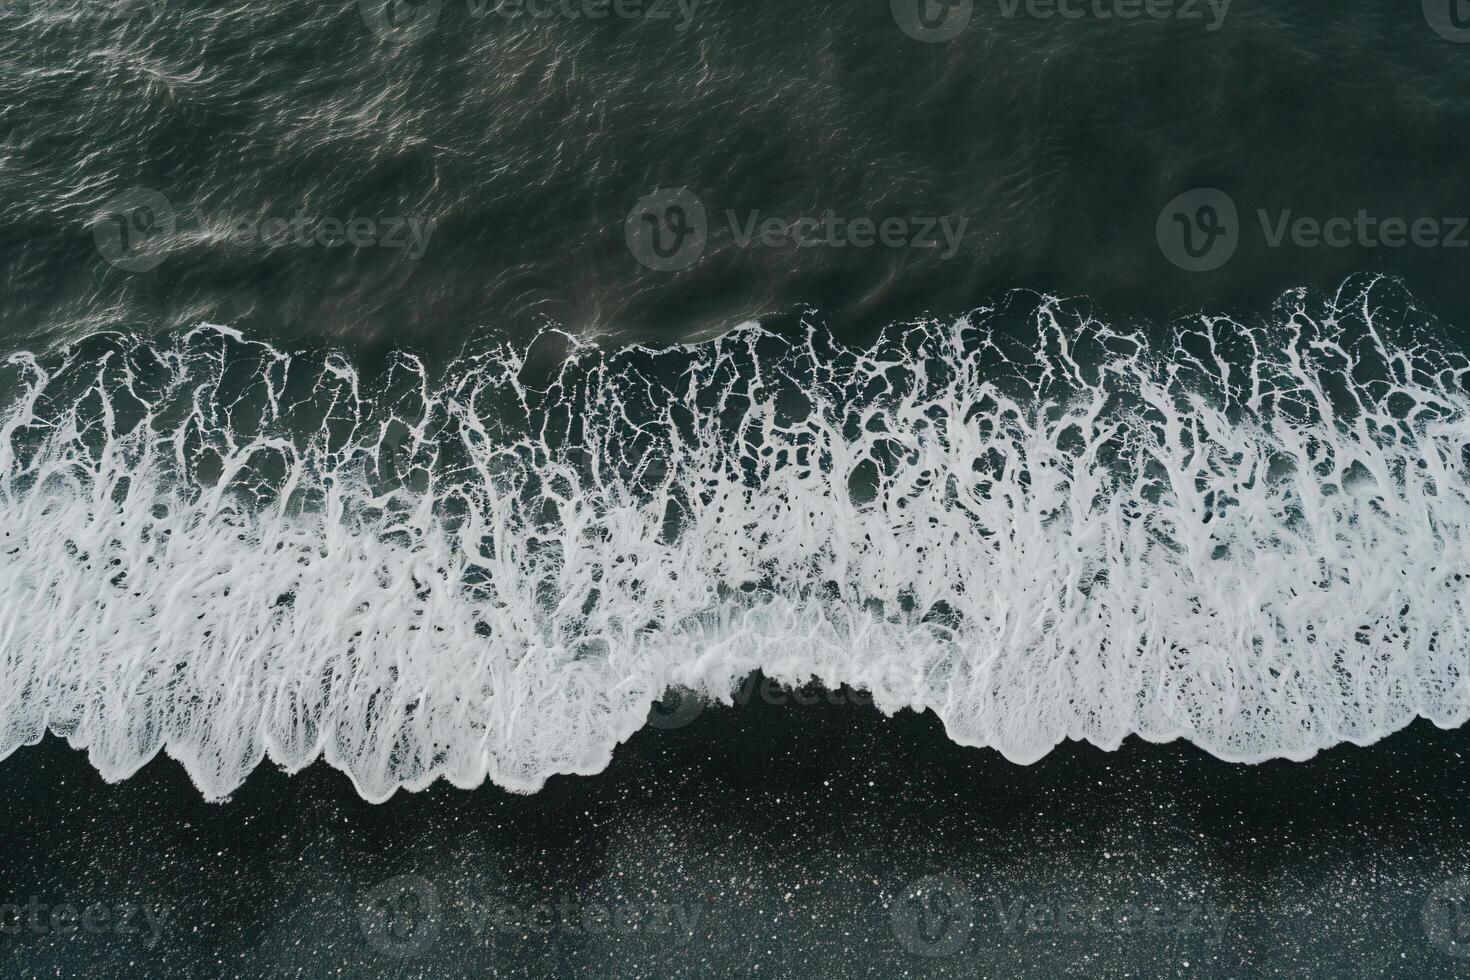 photo vertical overhead shot of a wavy sea